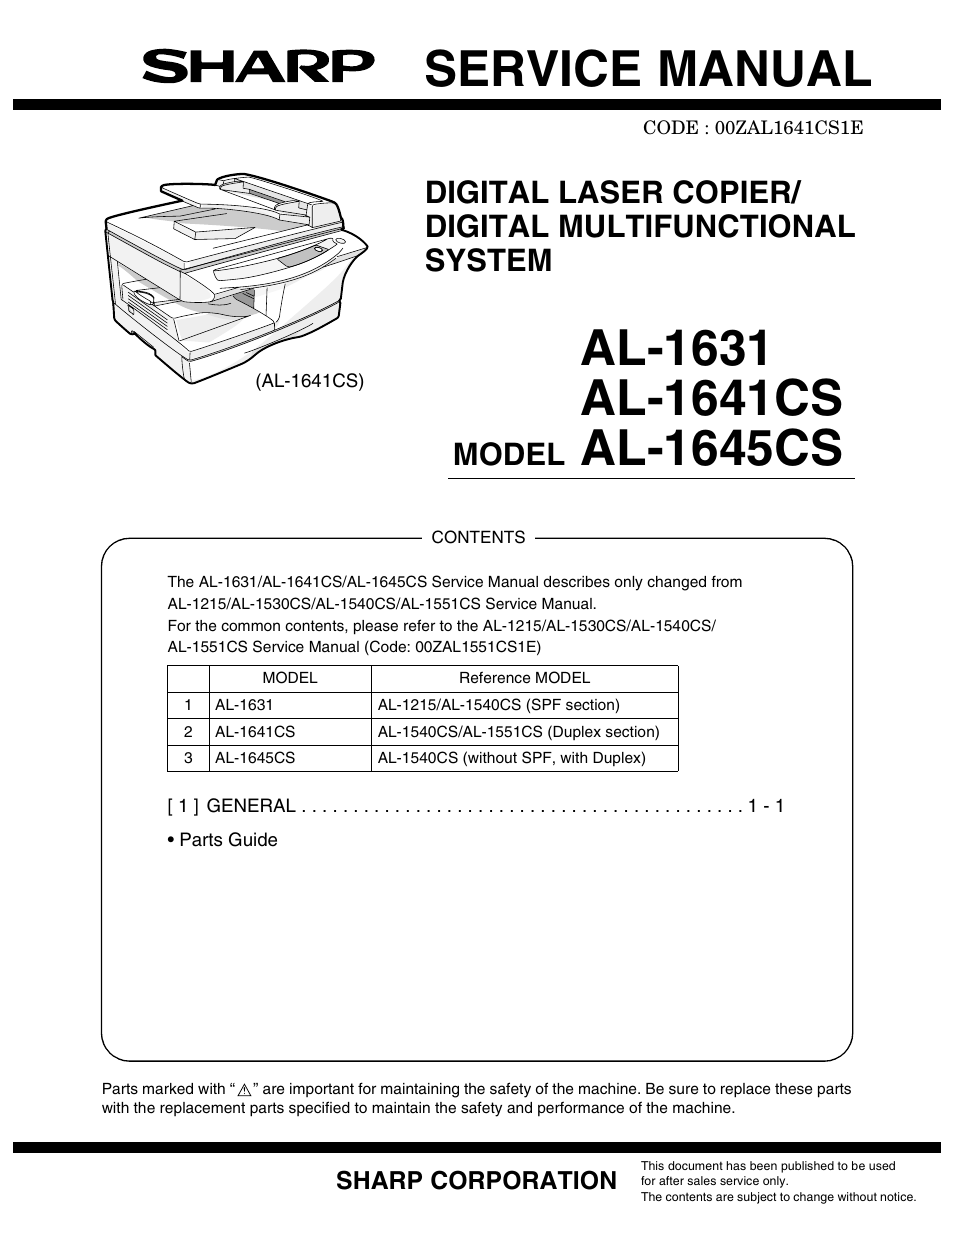 Sharp AL-1641CS User Manual | 20 pages